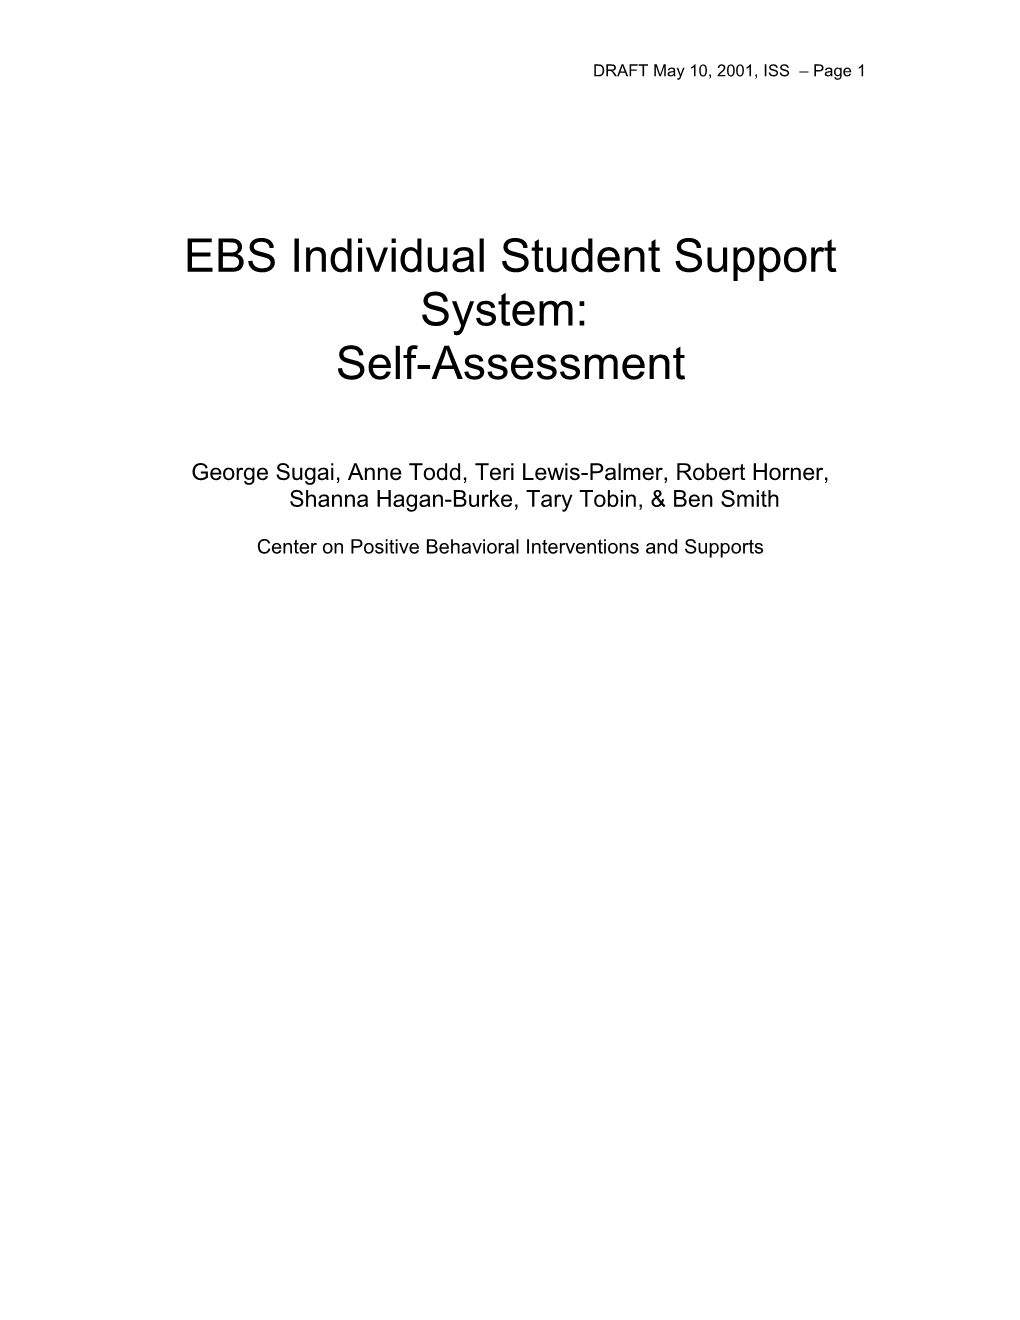 School-Wide Behavior Support System